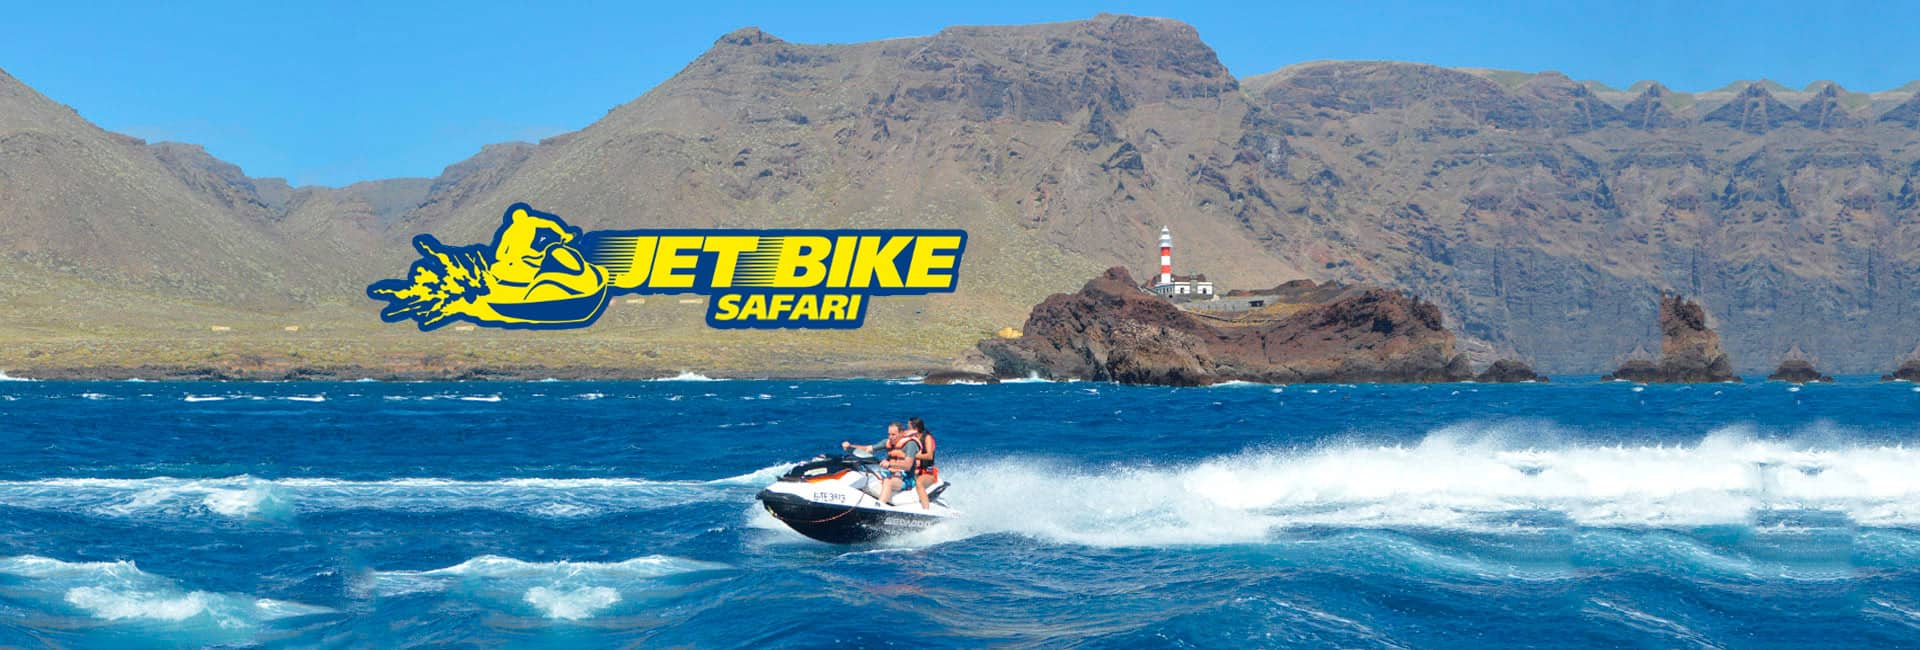 jet bike safari tenerife